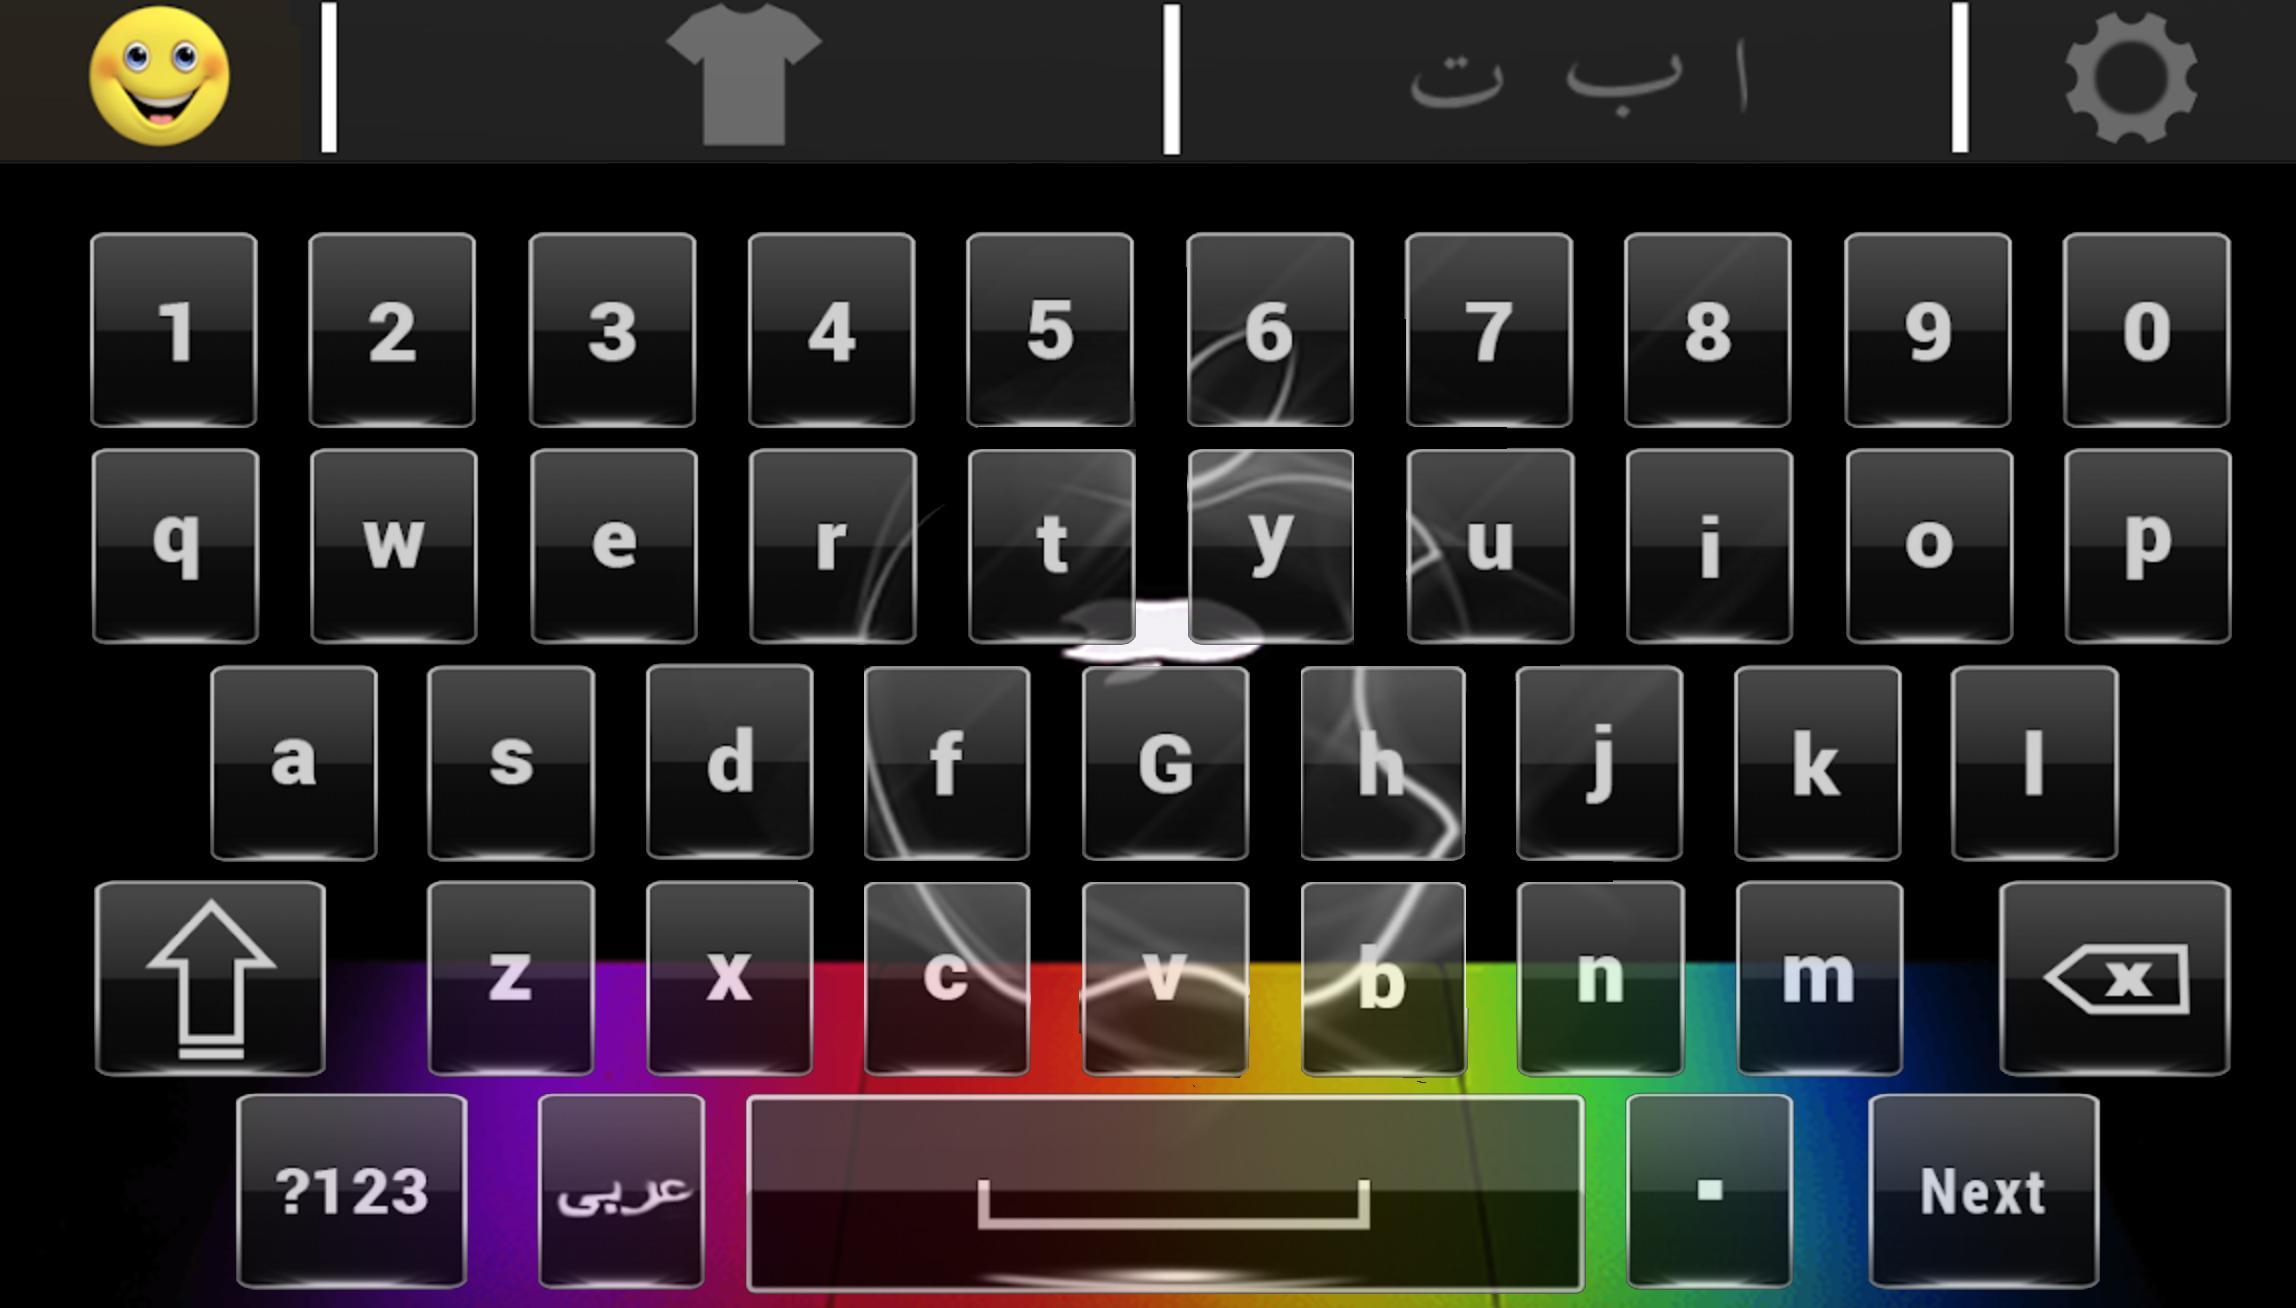 Luxury Arabic keyboard 2019 - Fast Typing Keyboard for ...